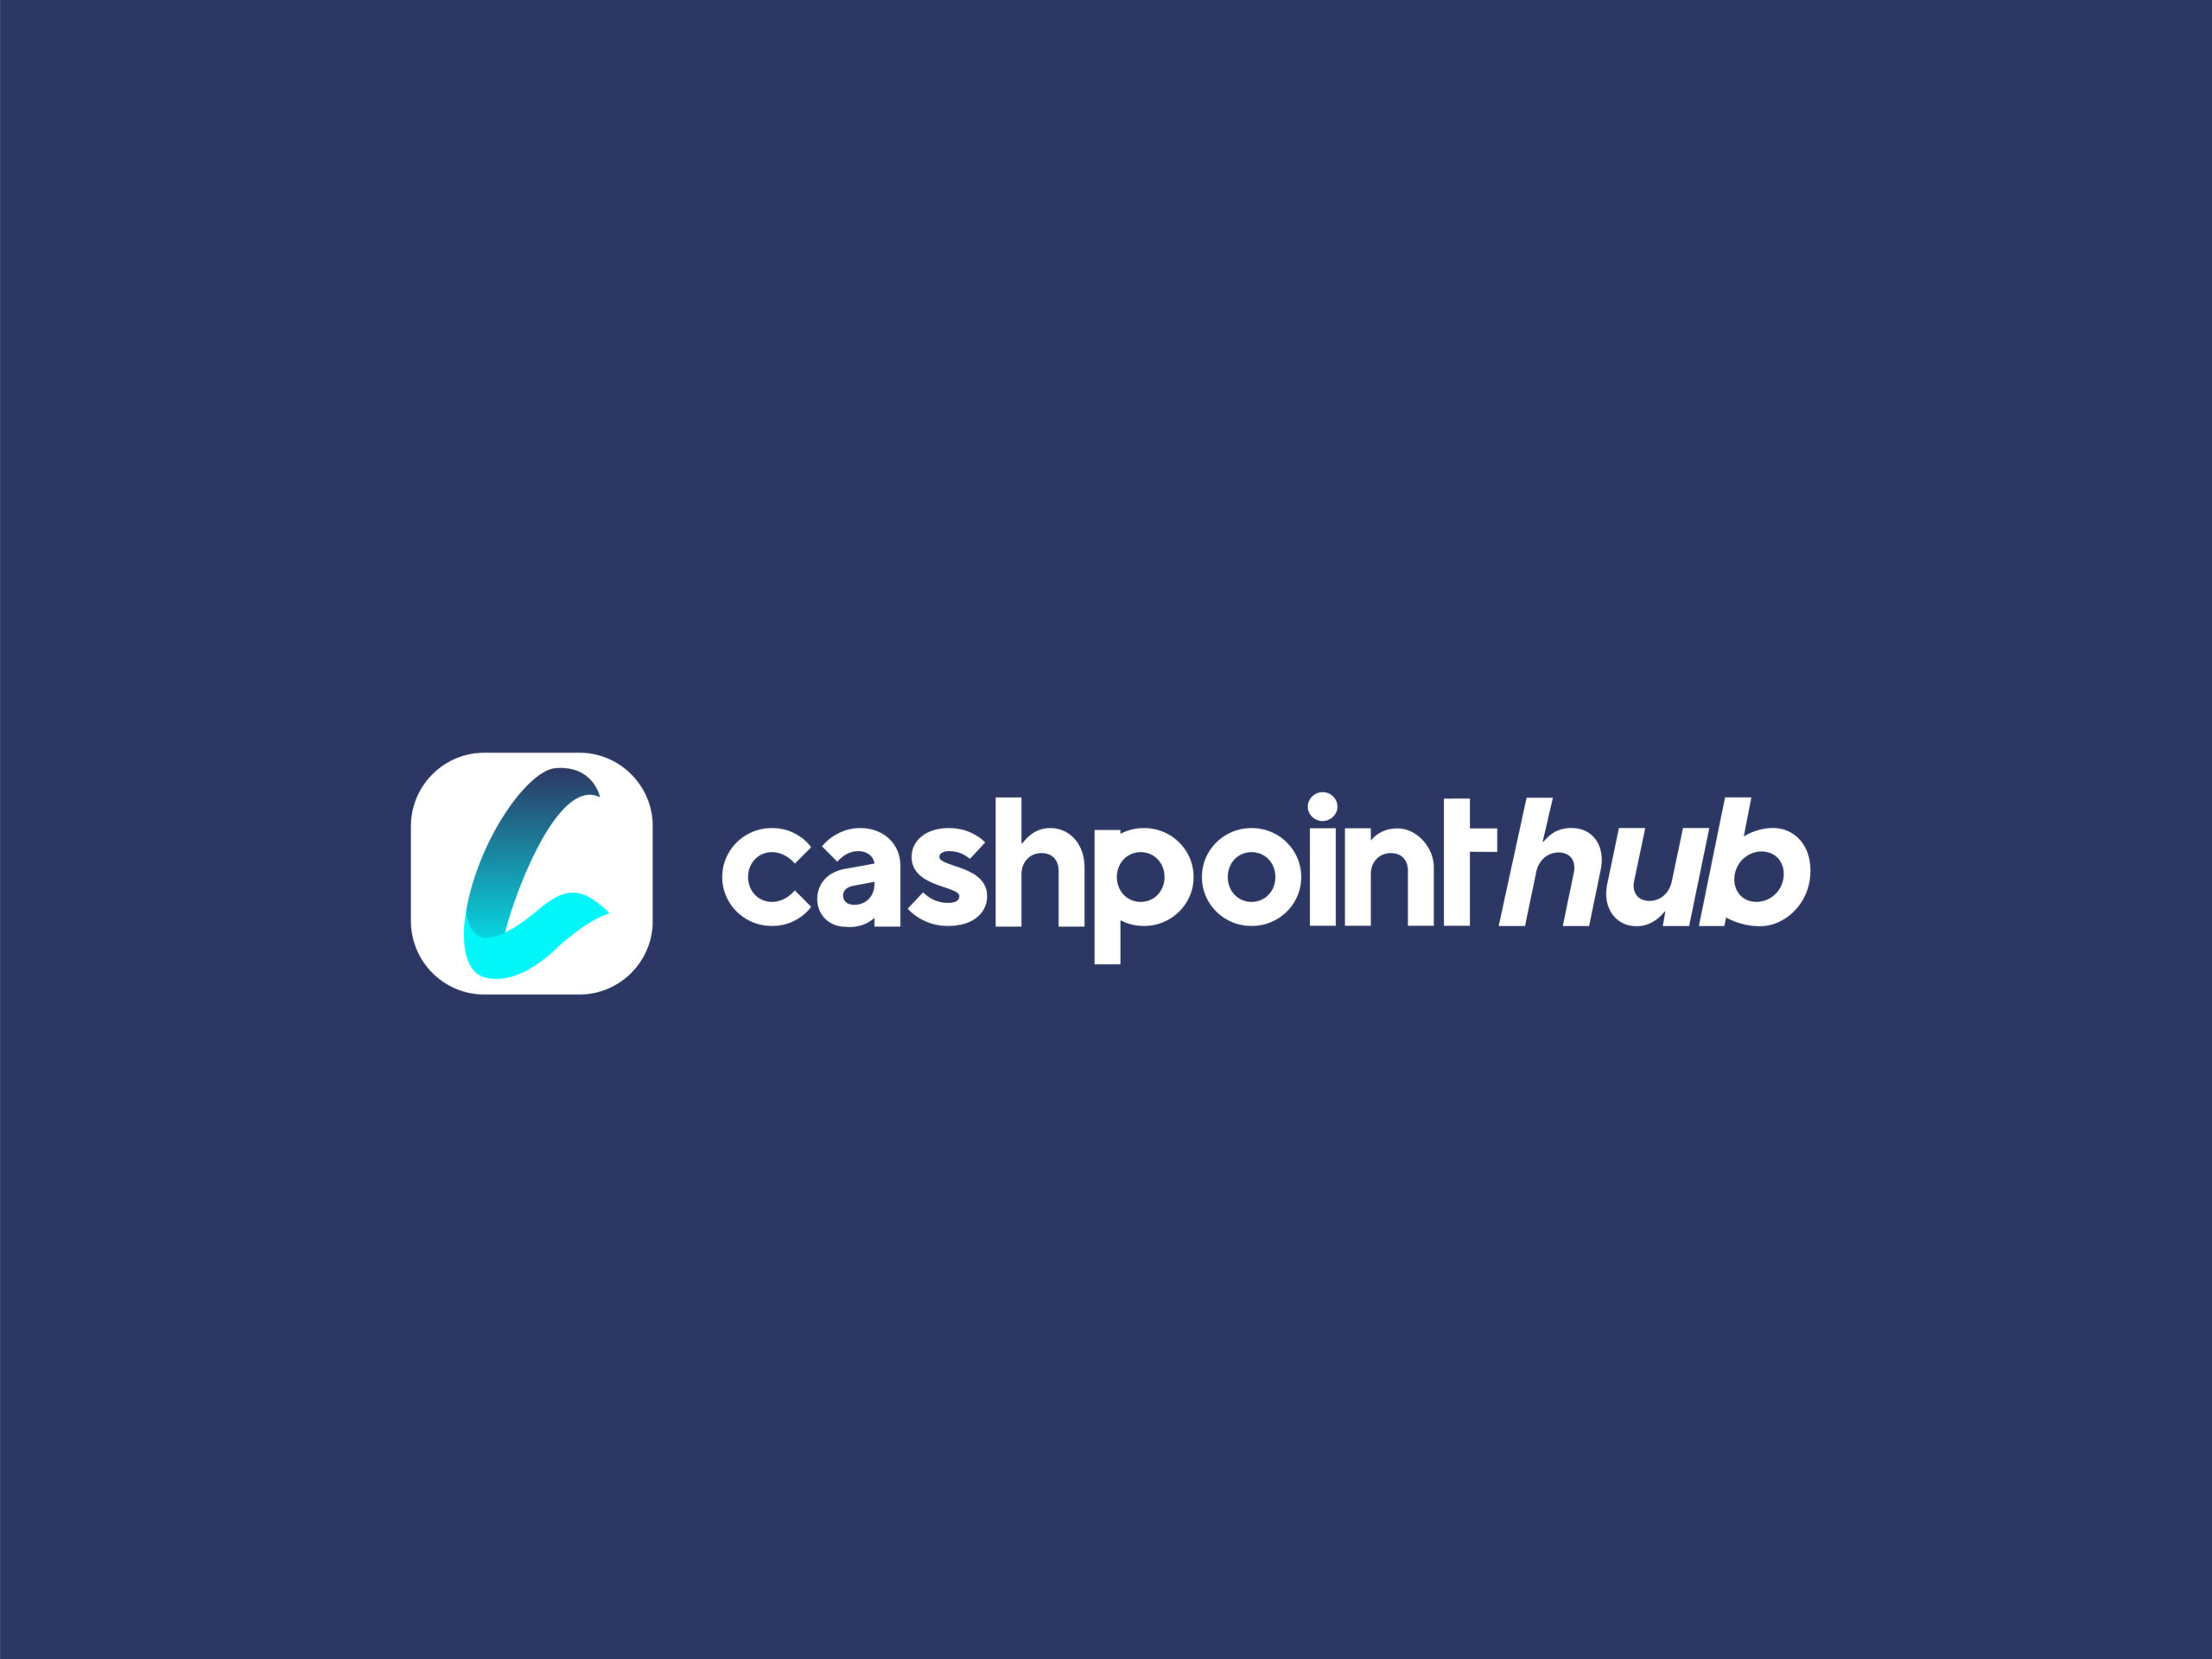 CashpointHub